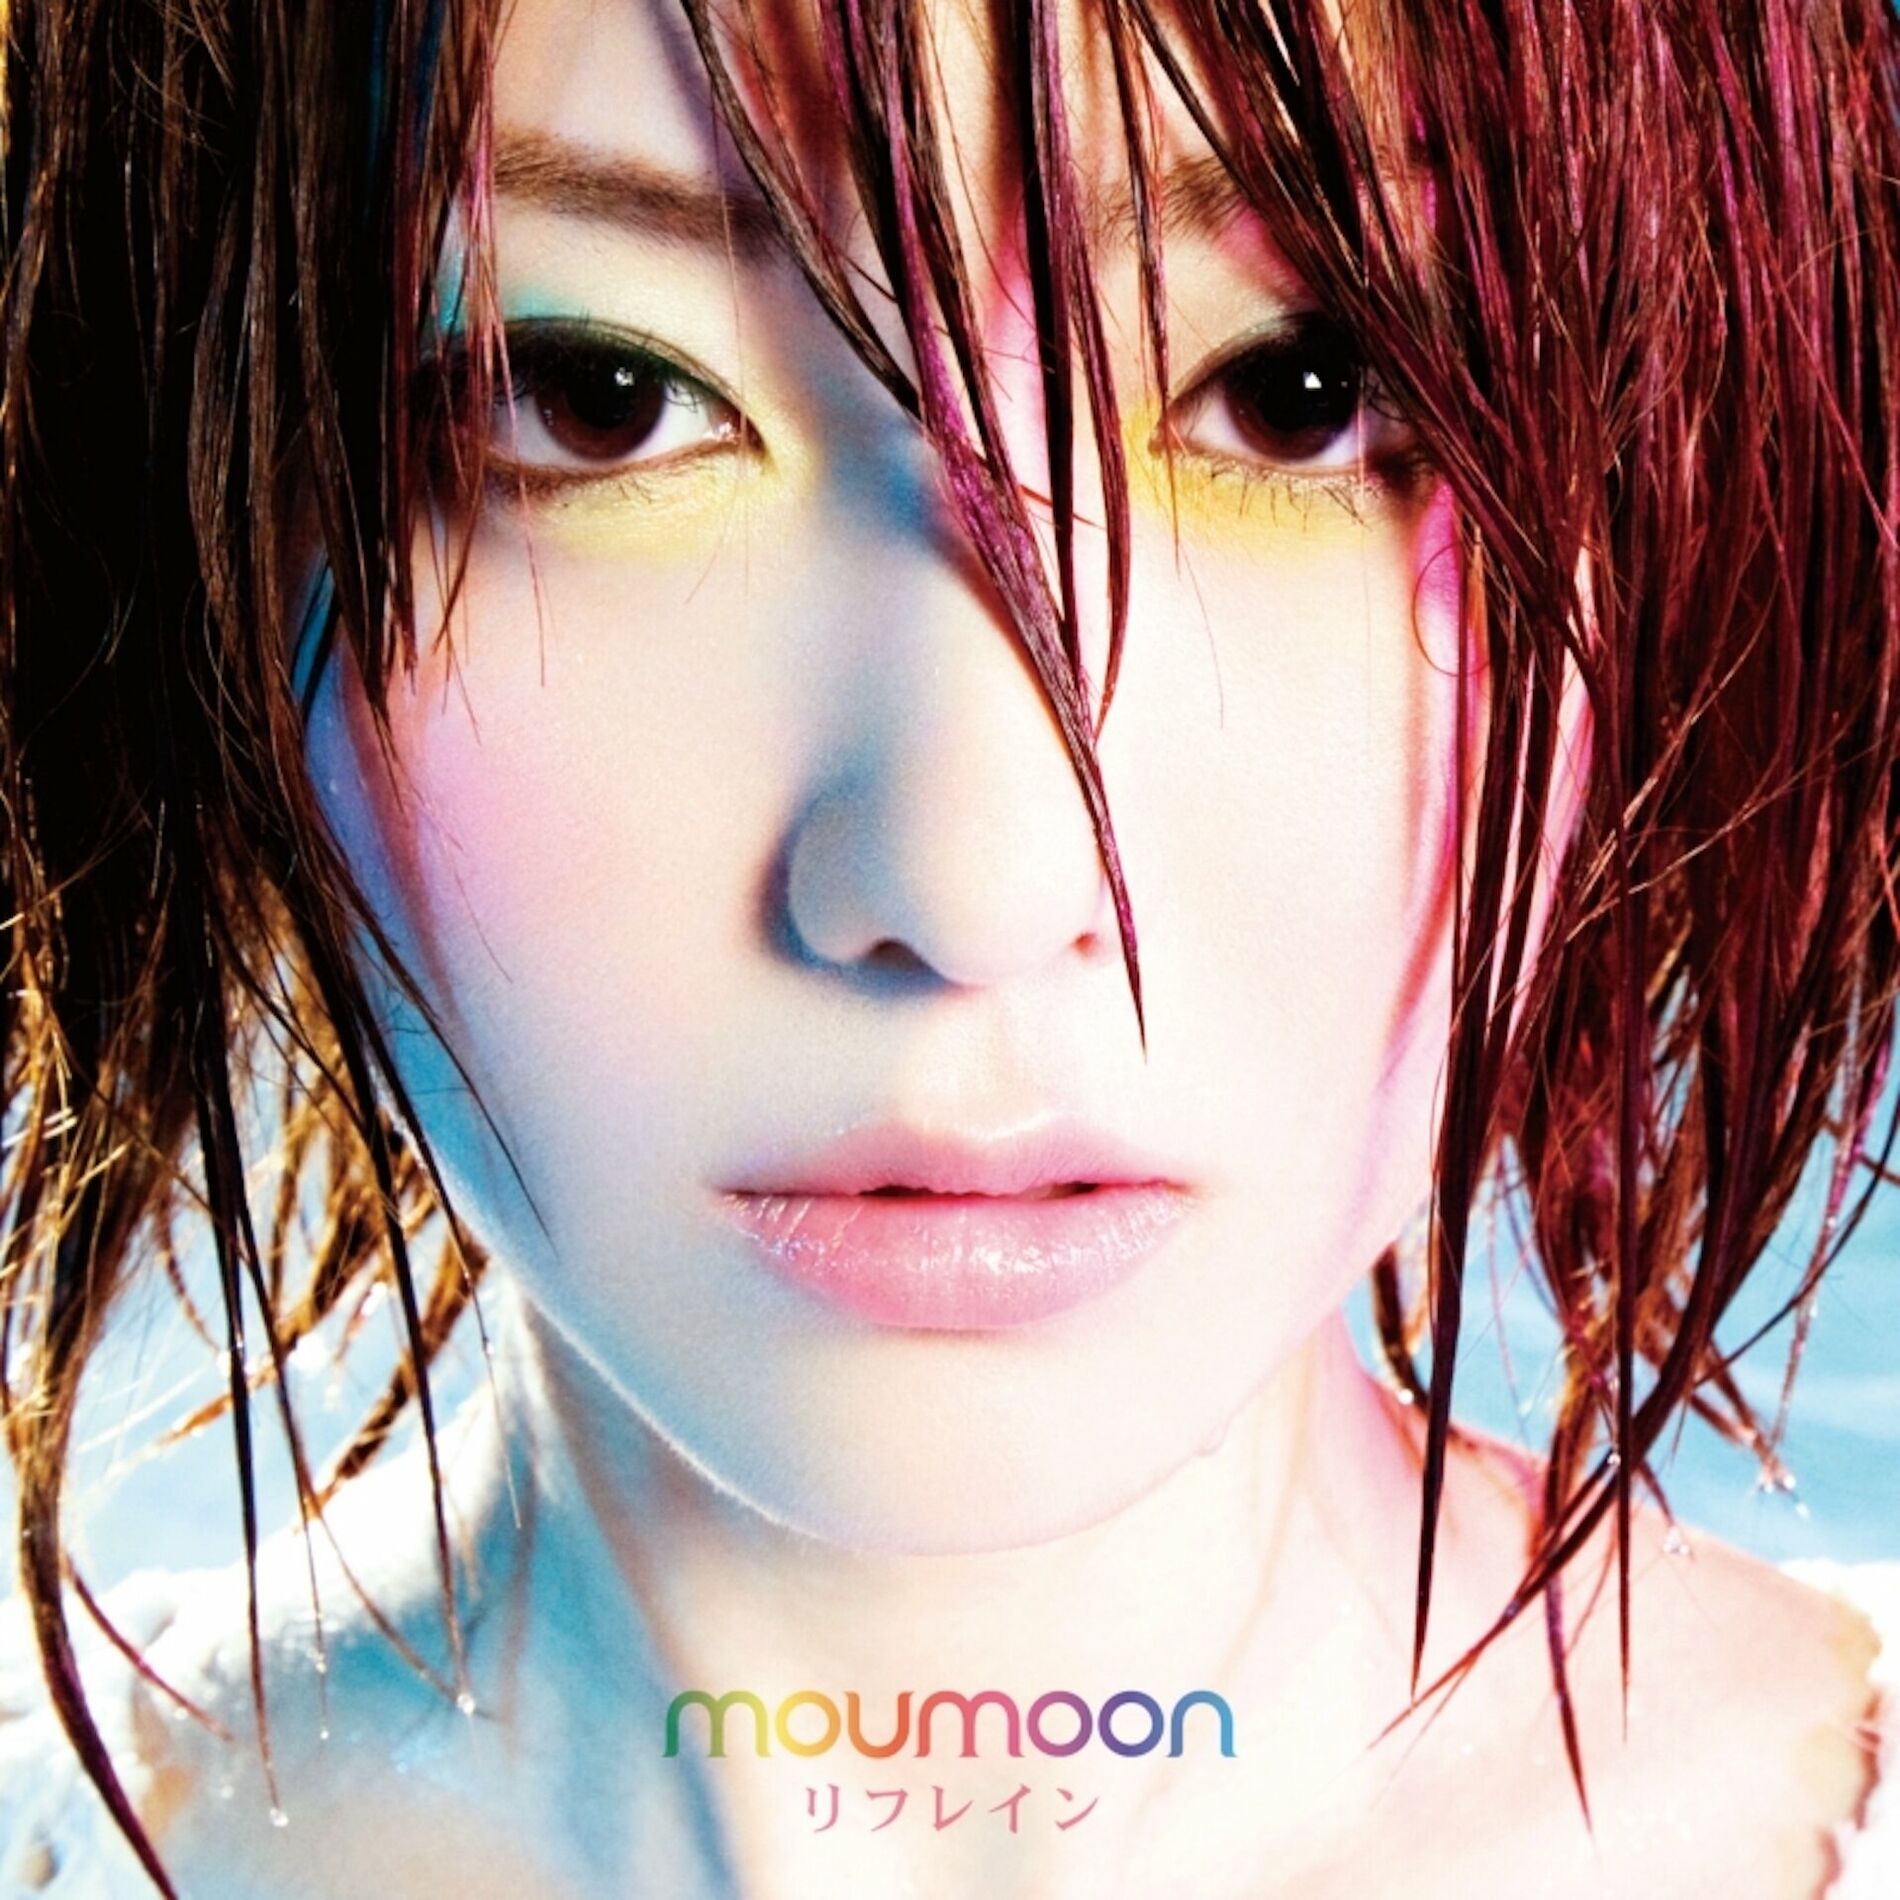 moumoon: albums